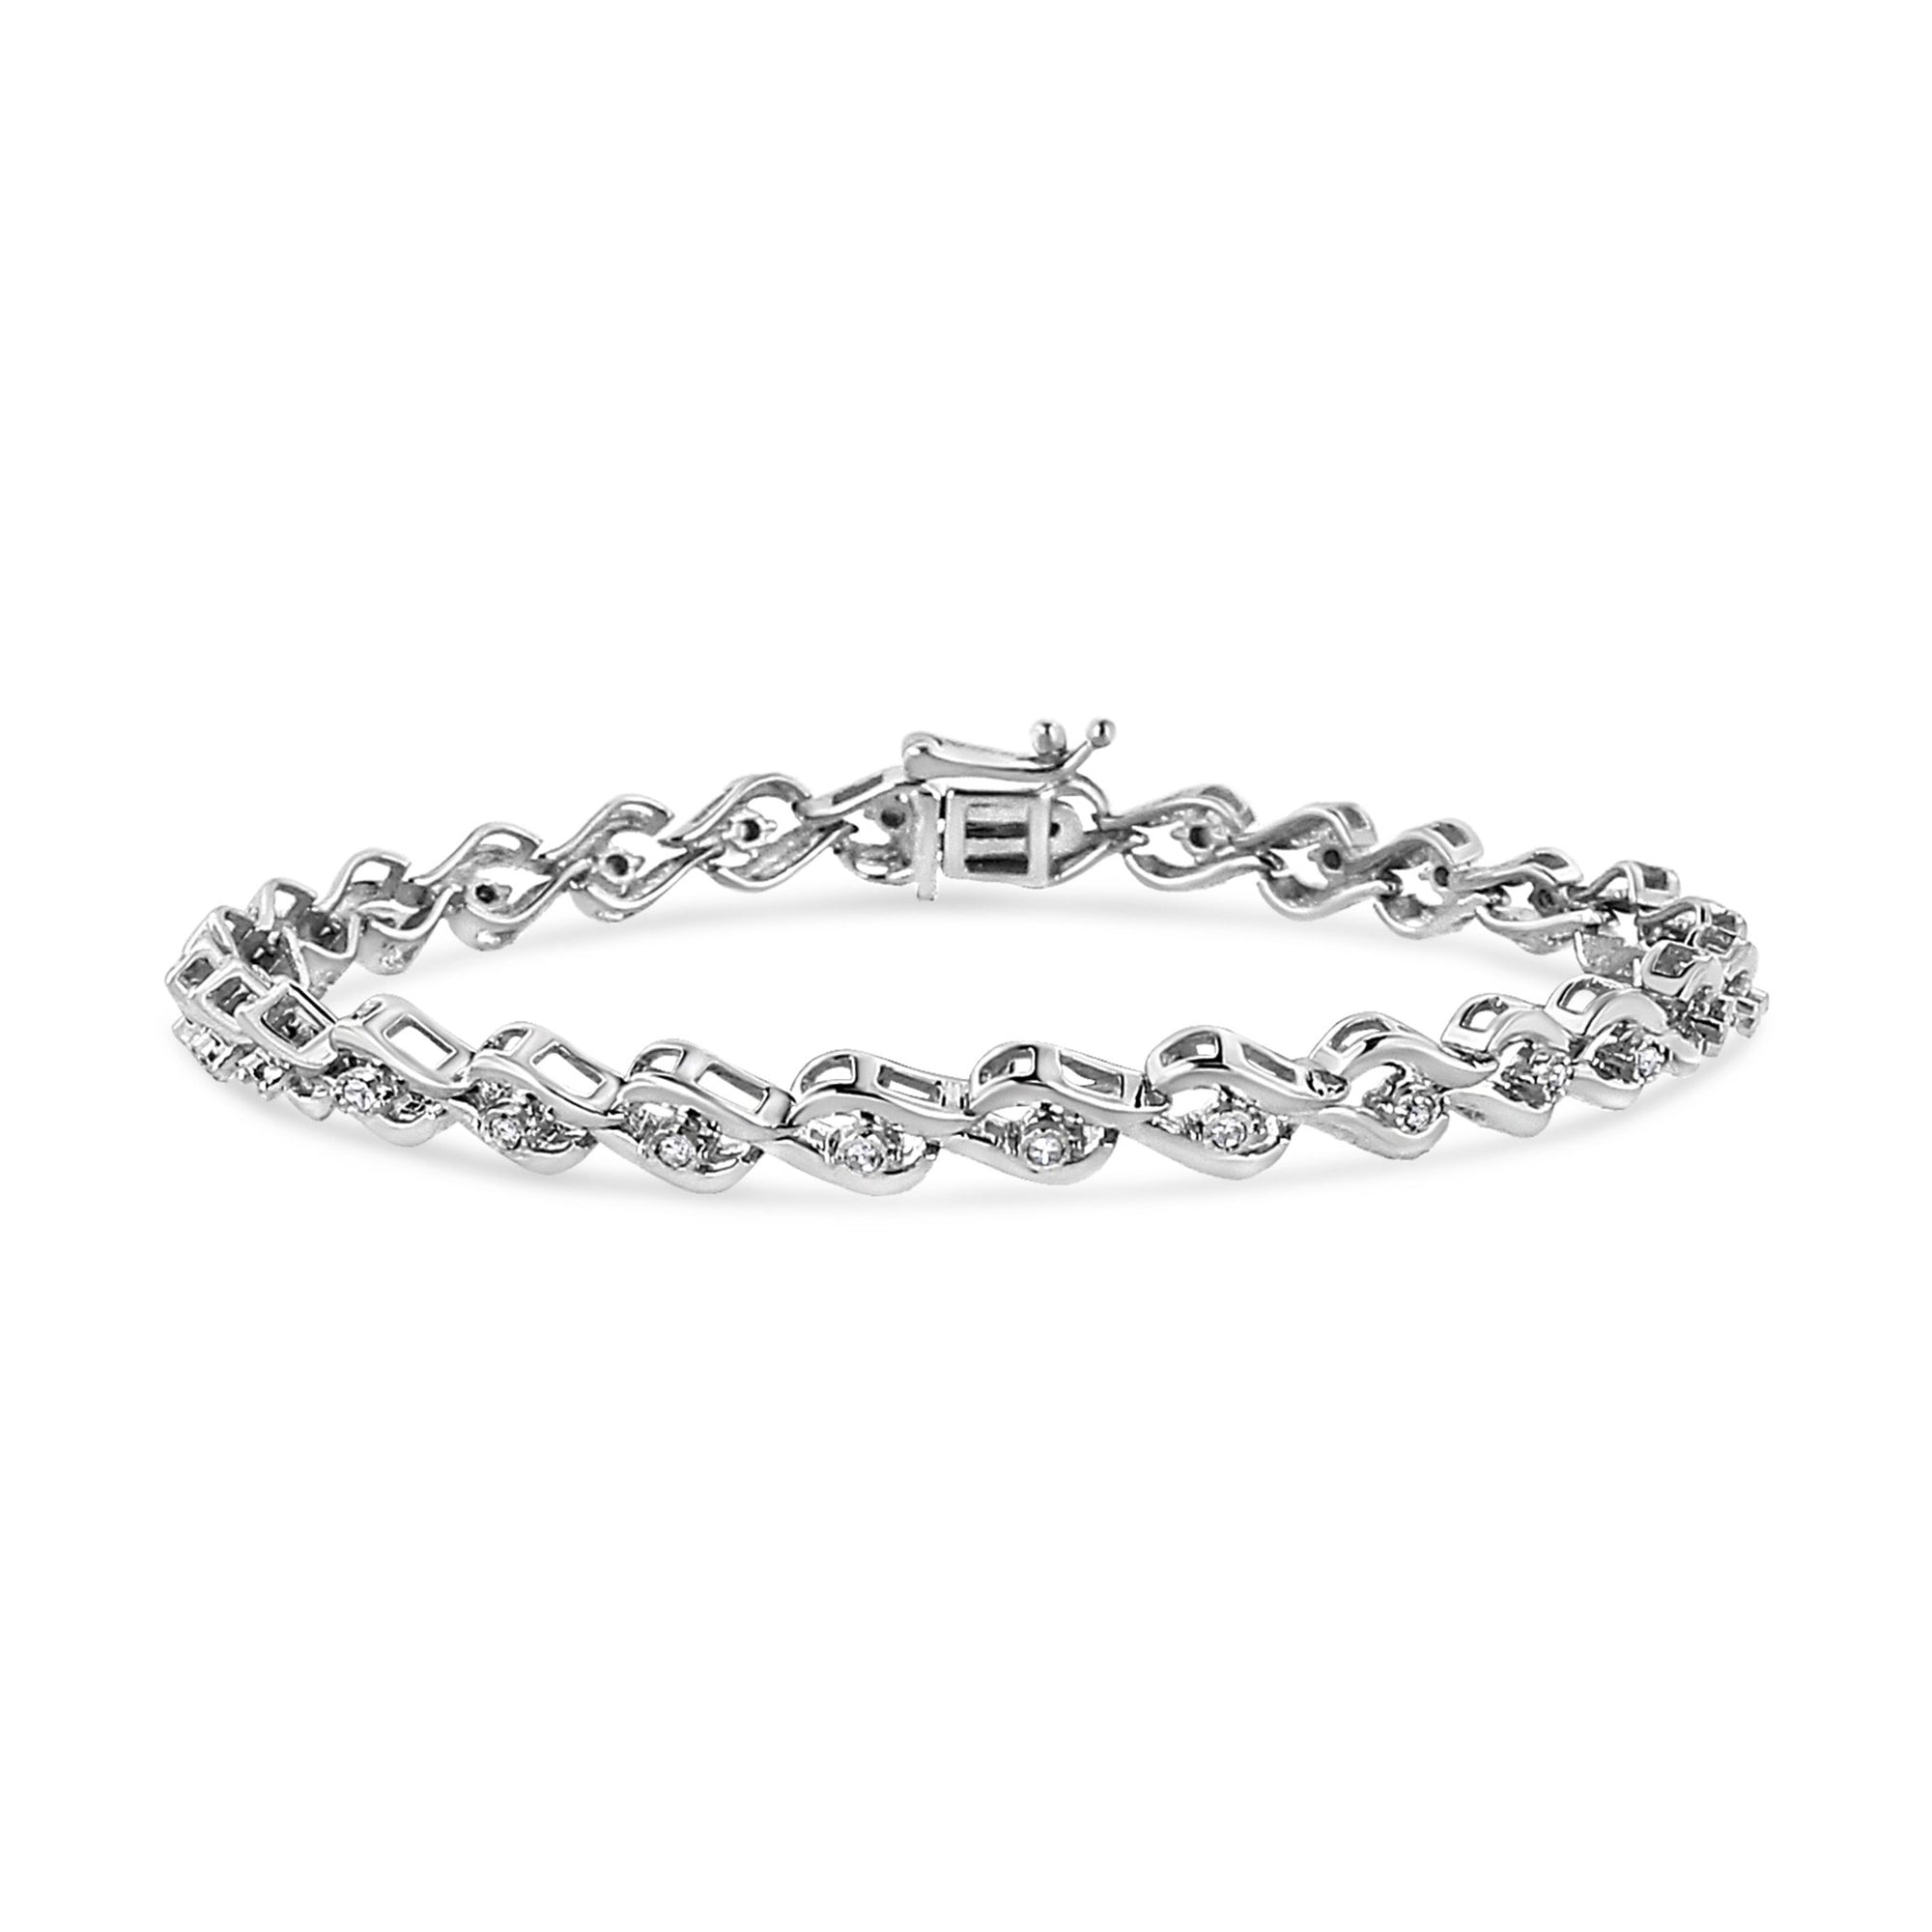 .925 Sterling Silver 1/10 Cttw Round-Cut Diamond Link Bracelet (I-J Color, I3 Promo Clarity) - 7.25" - LinkagejewelrydesignLinkagejewelrydesign